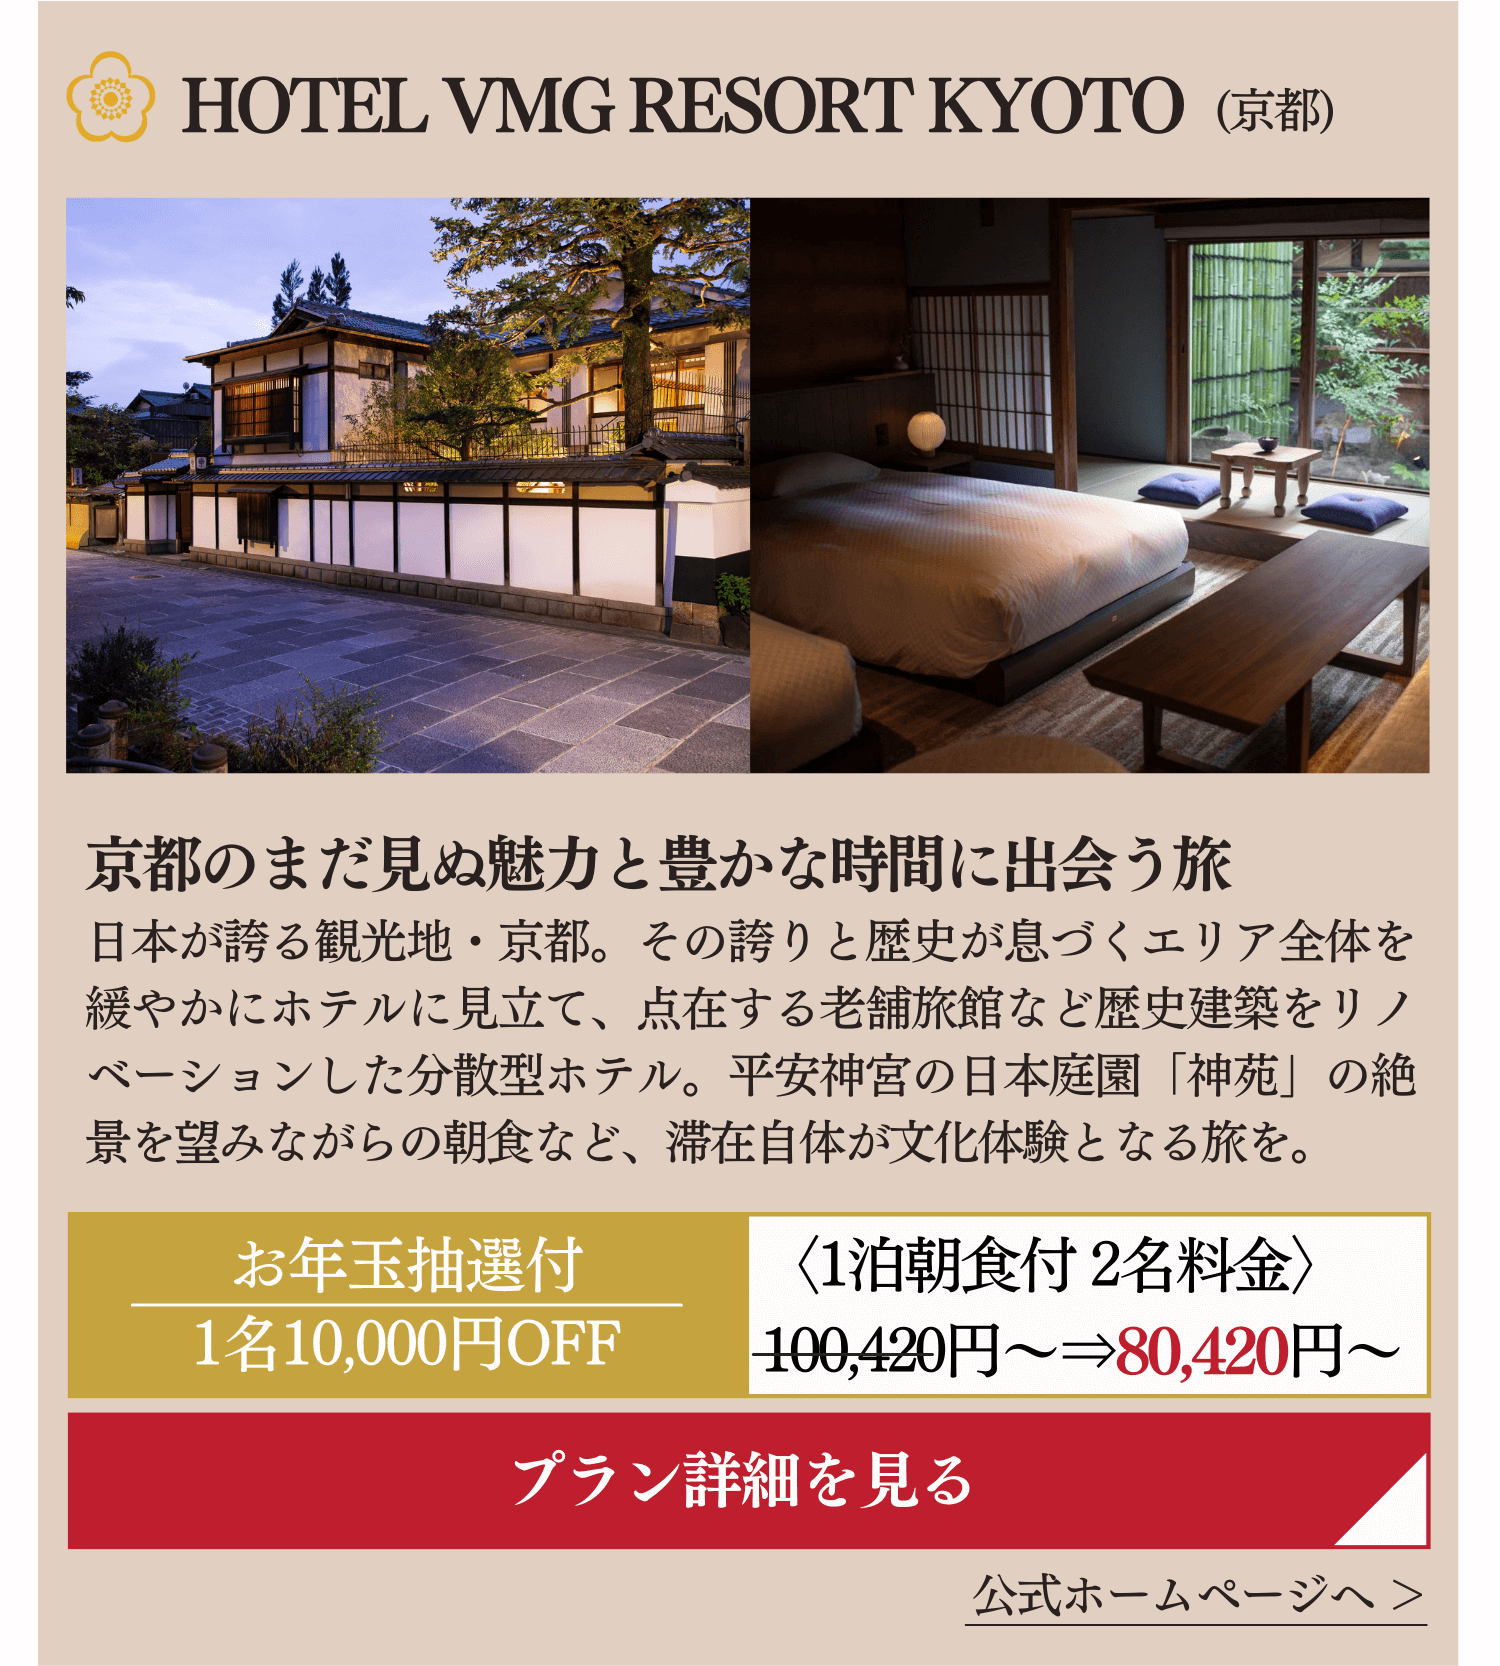 HOTEL VMG RESORT KYOTO (京都)